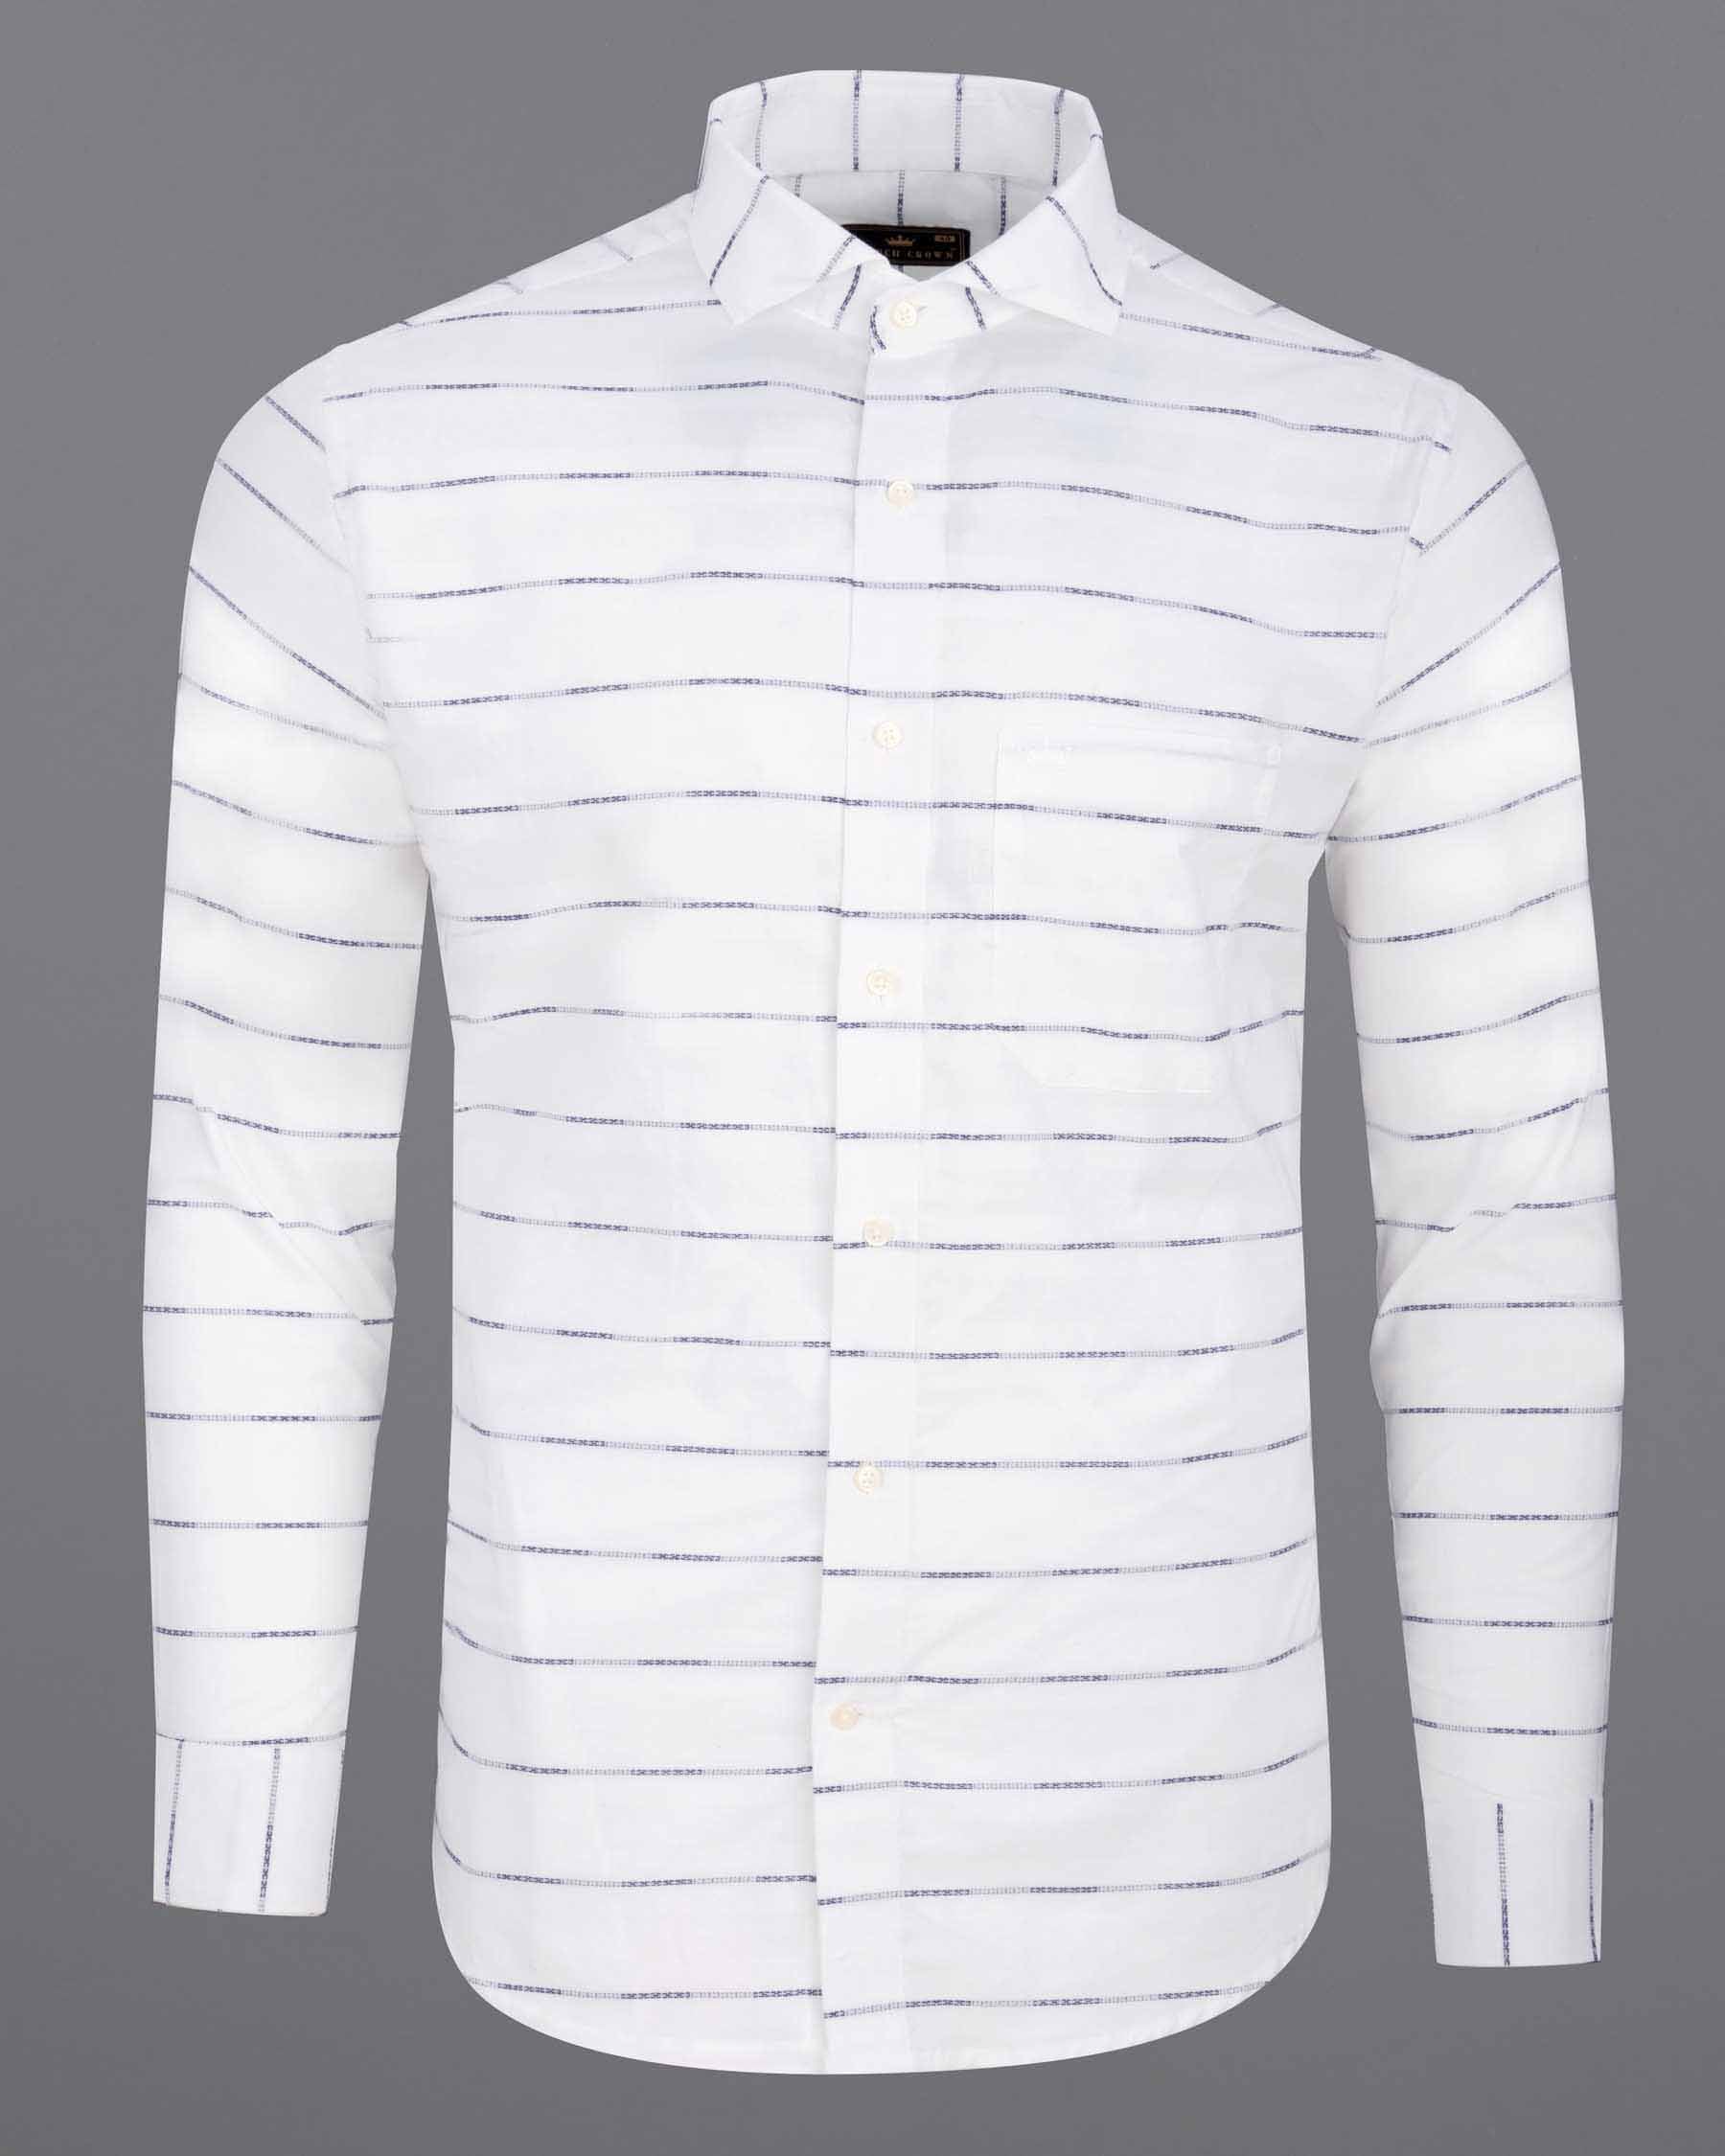 Bright White Striped Dobby Striped Premium Giza Cotton Shirt 6164-CA-38, 6164-CA-H-38, 6164-CA-39, 6164-CA-H-39, 6164-CA-40, 6164-CA-H-40, 6164-CA-42, 6164-CA-H-42, 6164-CA-44, 6164-CA-H-44, 6164-CA-46, 6164-CA-H-46, 6164-CA-48, 6164-CA-H-48, 6164-CA-50, 6164-CA-H-50, 6164-CA-52, 6164-CA-H-52